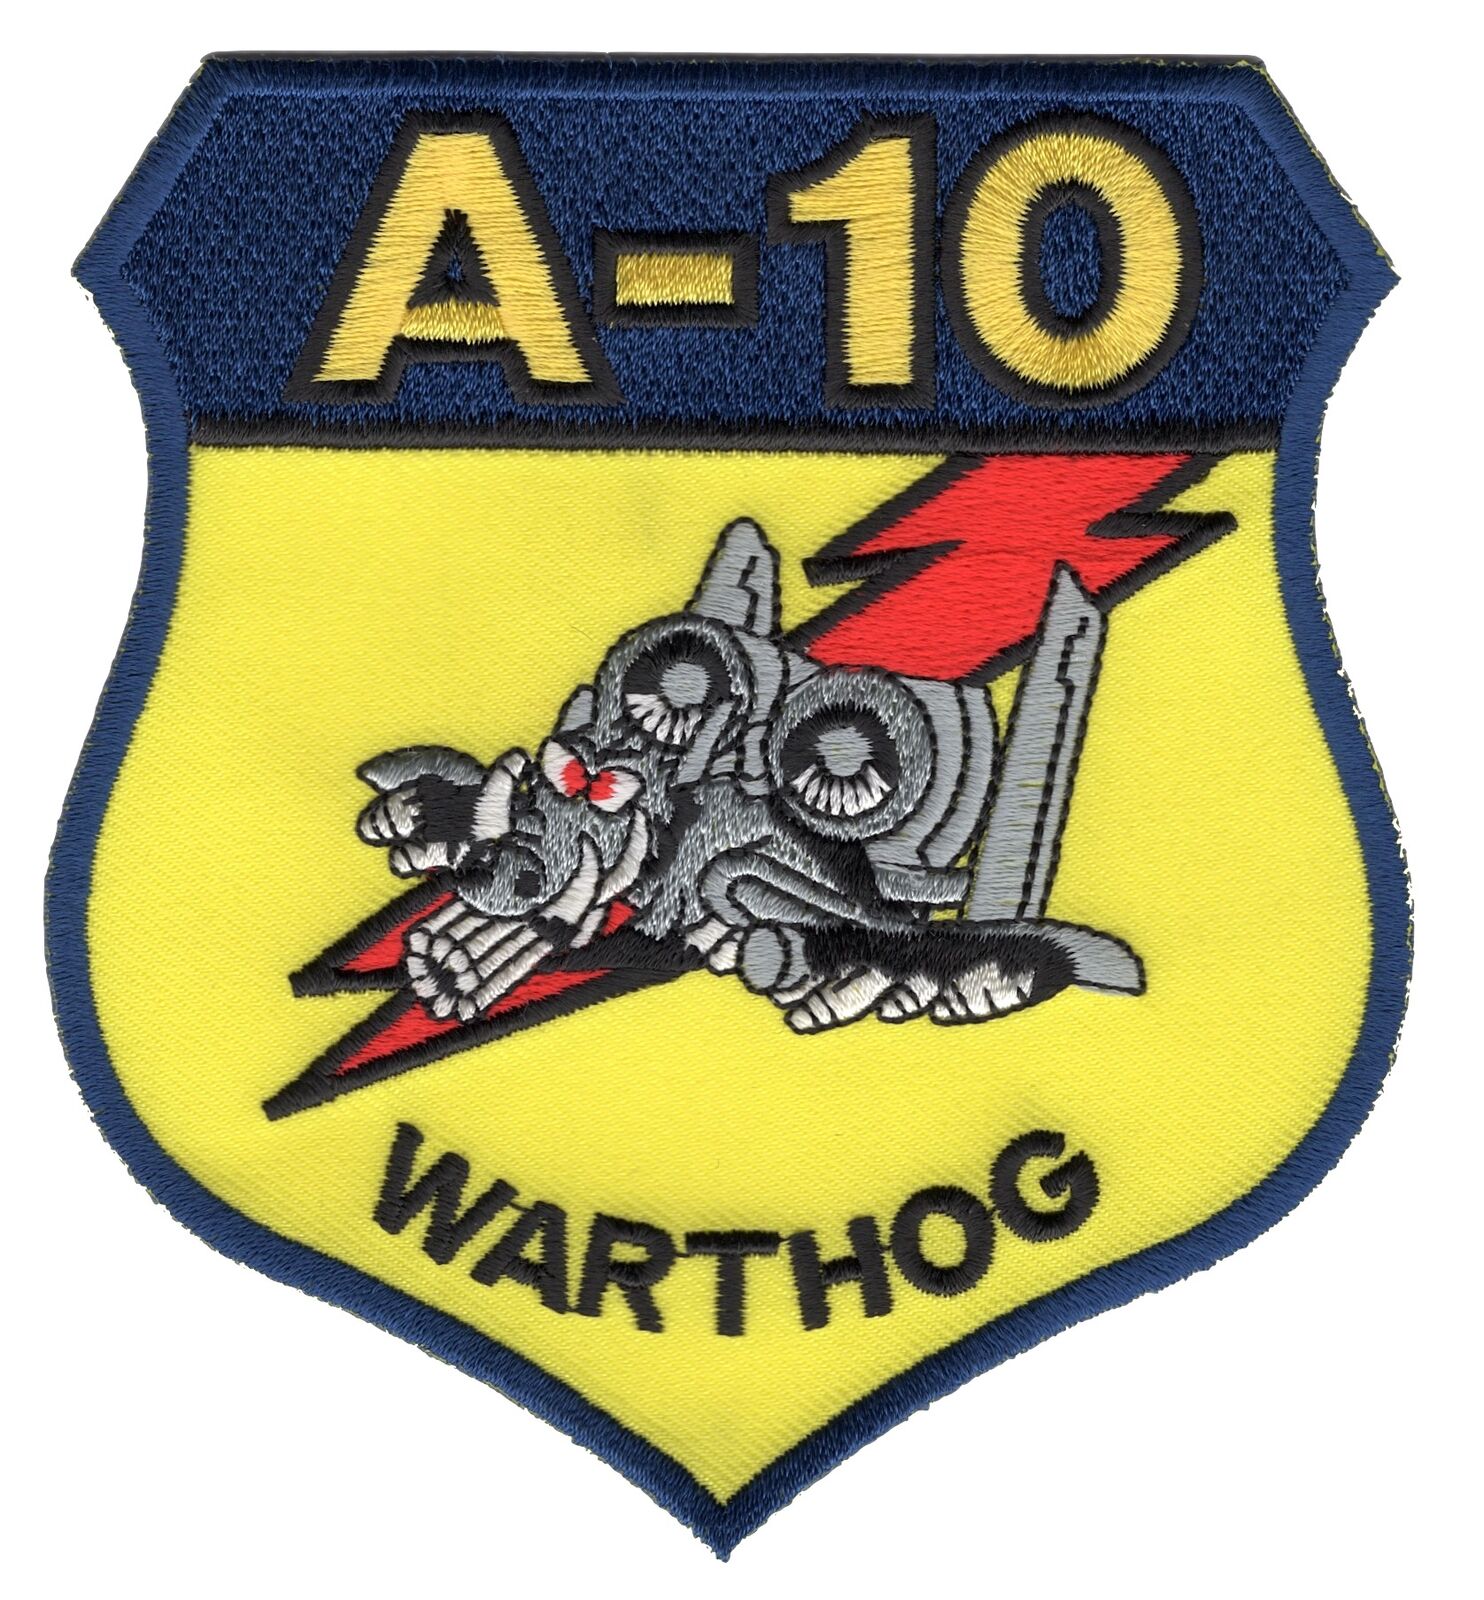 Fairchild Republic A-10 Thunderbolt II Patch Warthog